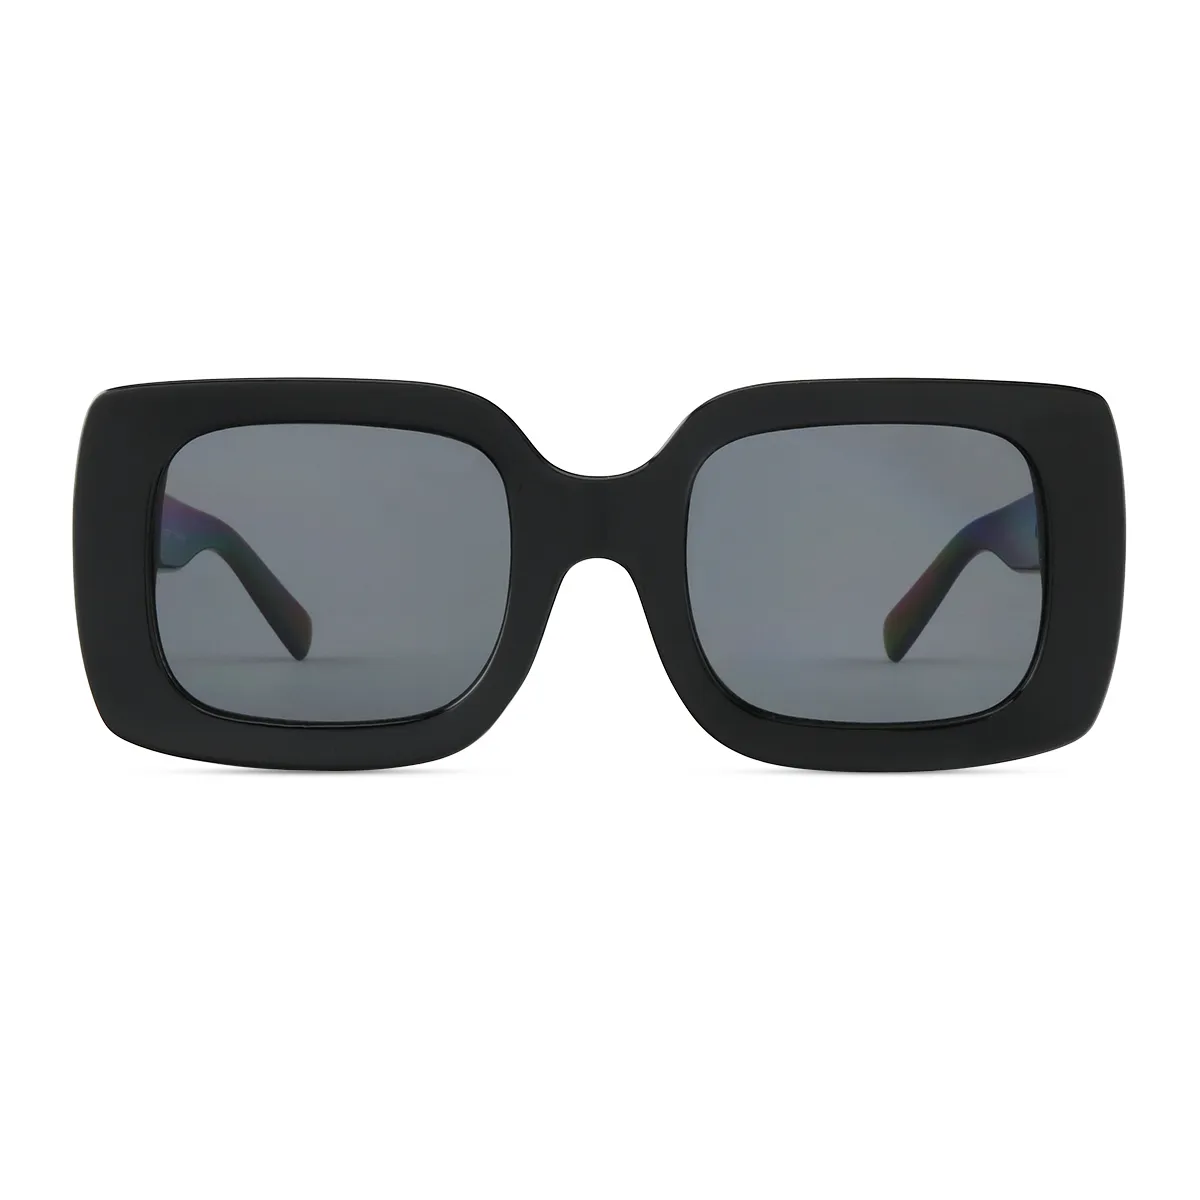 Urania - Square Black Sunglasses for Women